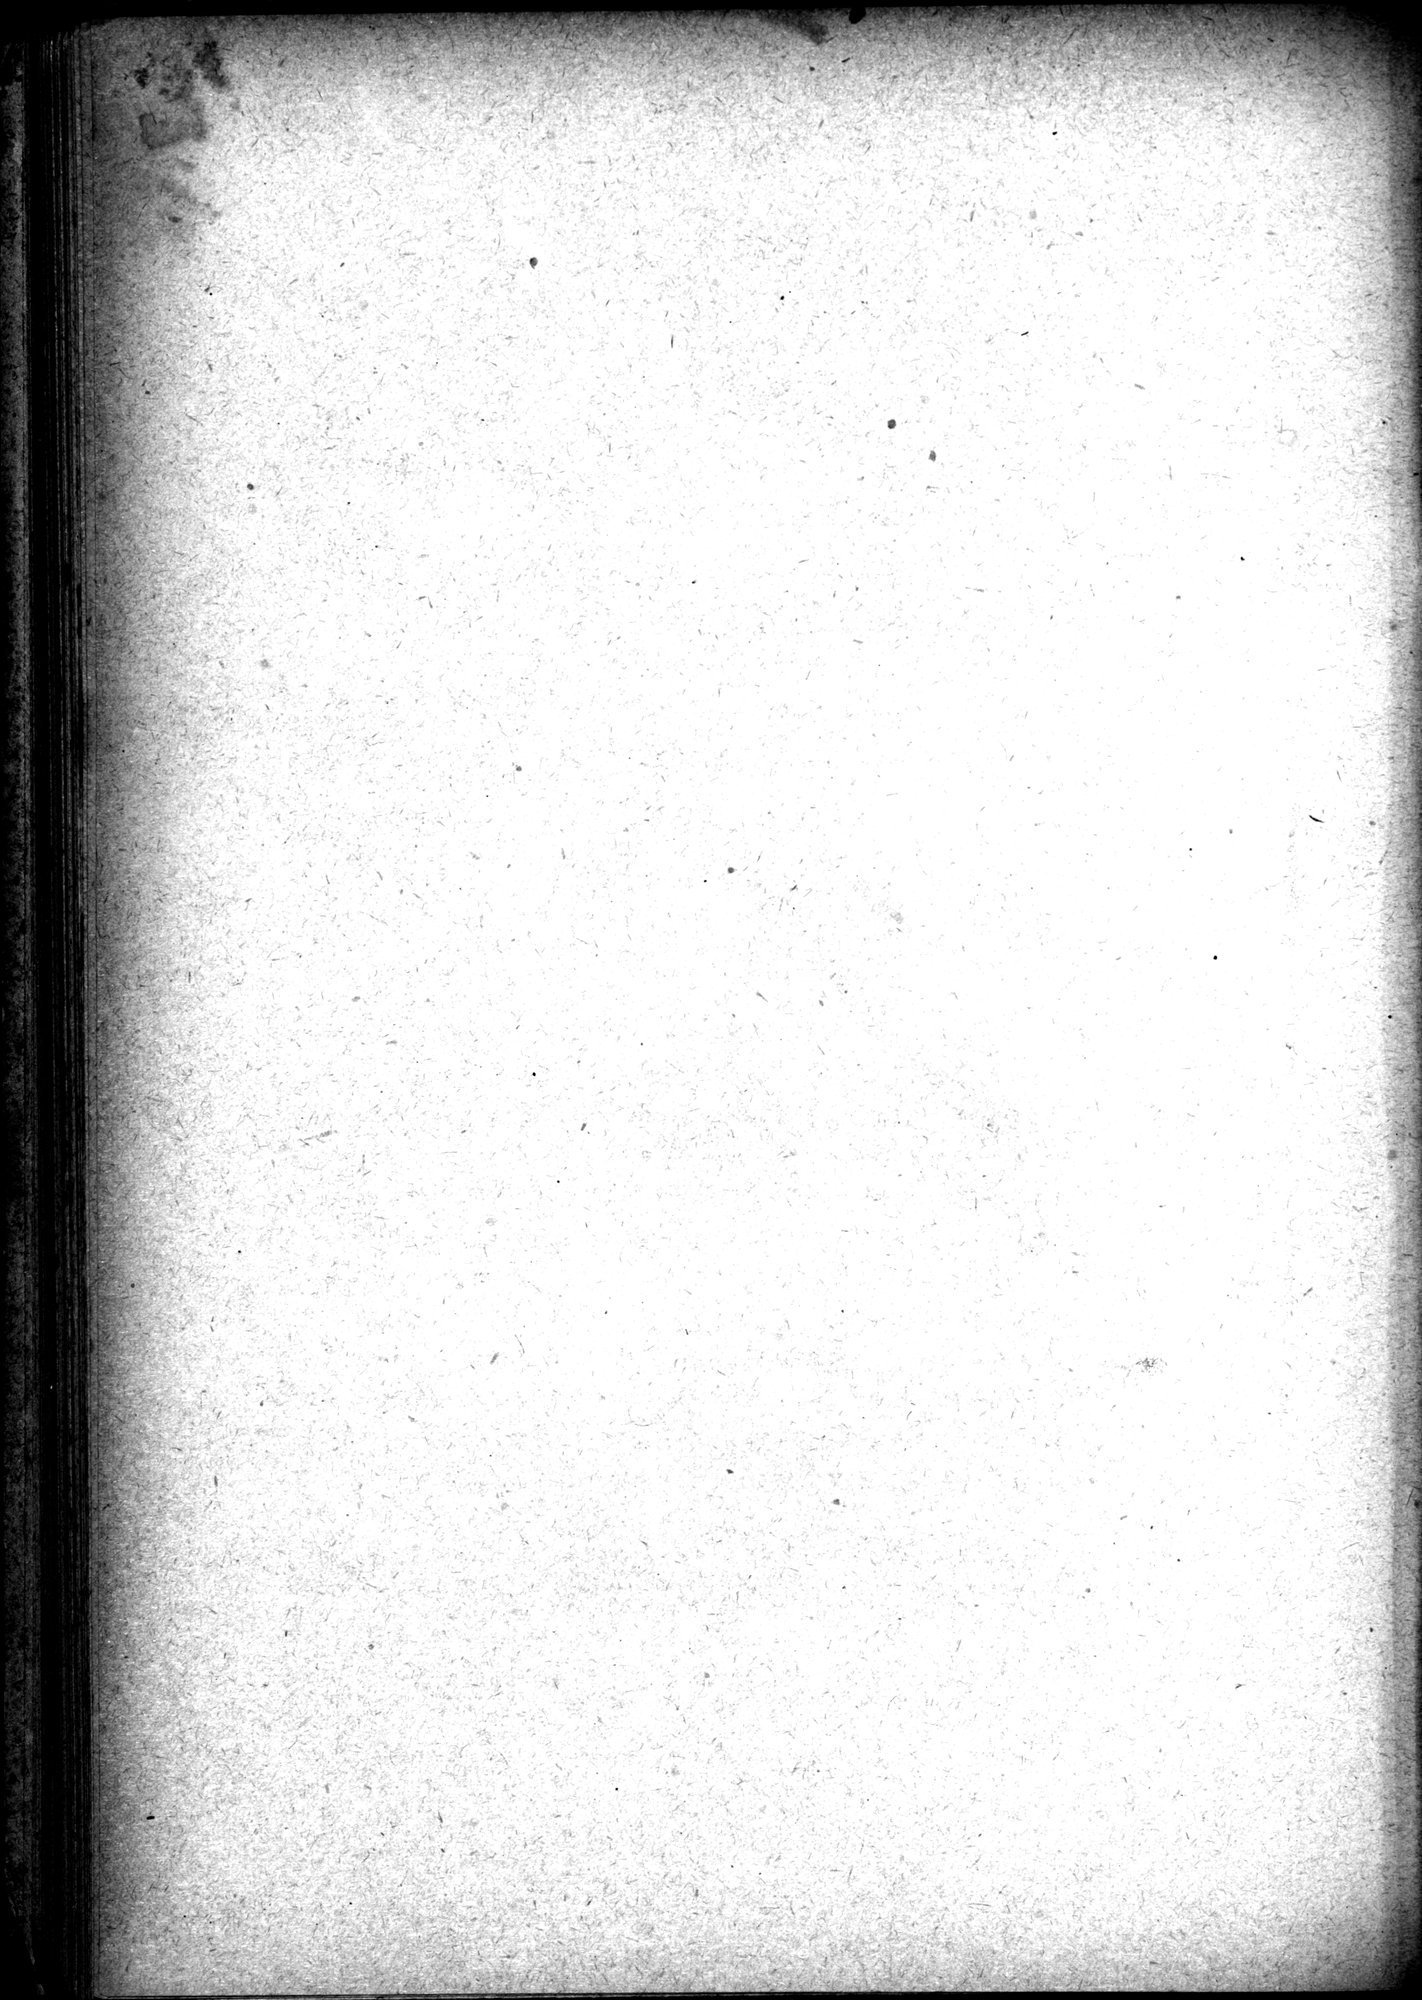 Mongoliya i Amdo i mertby gorod Khara-Khoto : vol.1 / Page 270 (Grayscale High Resolution Image)